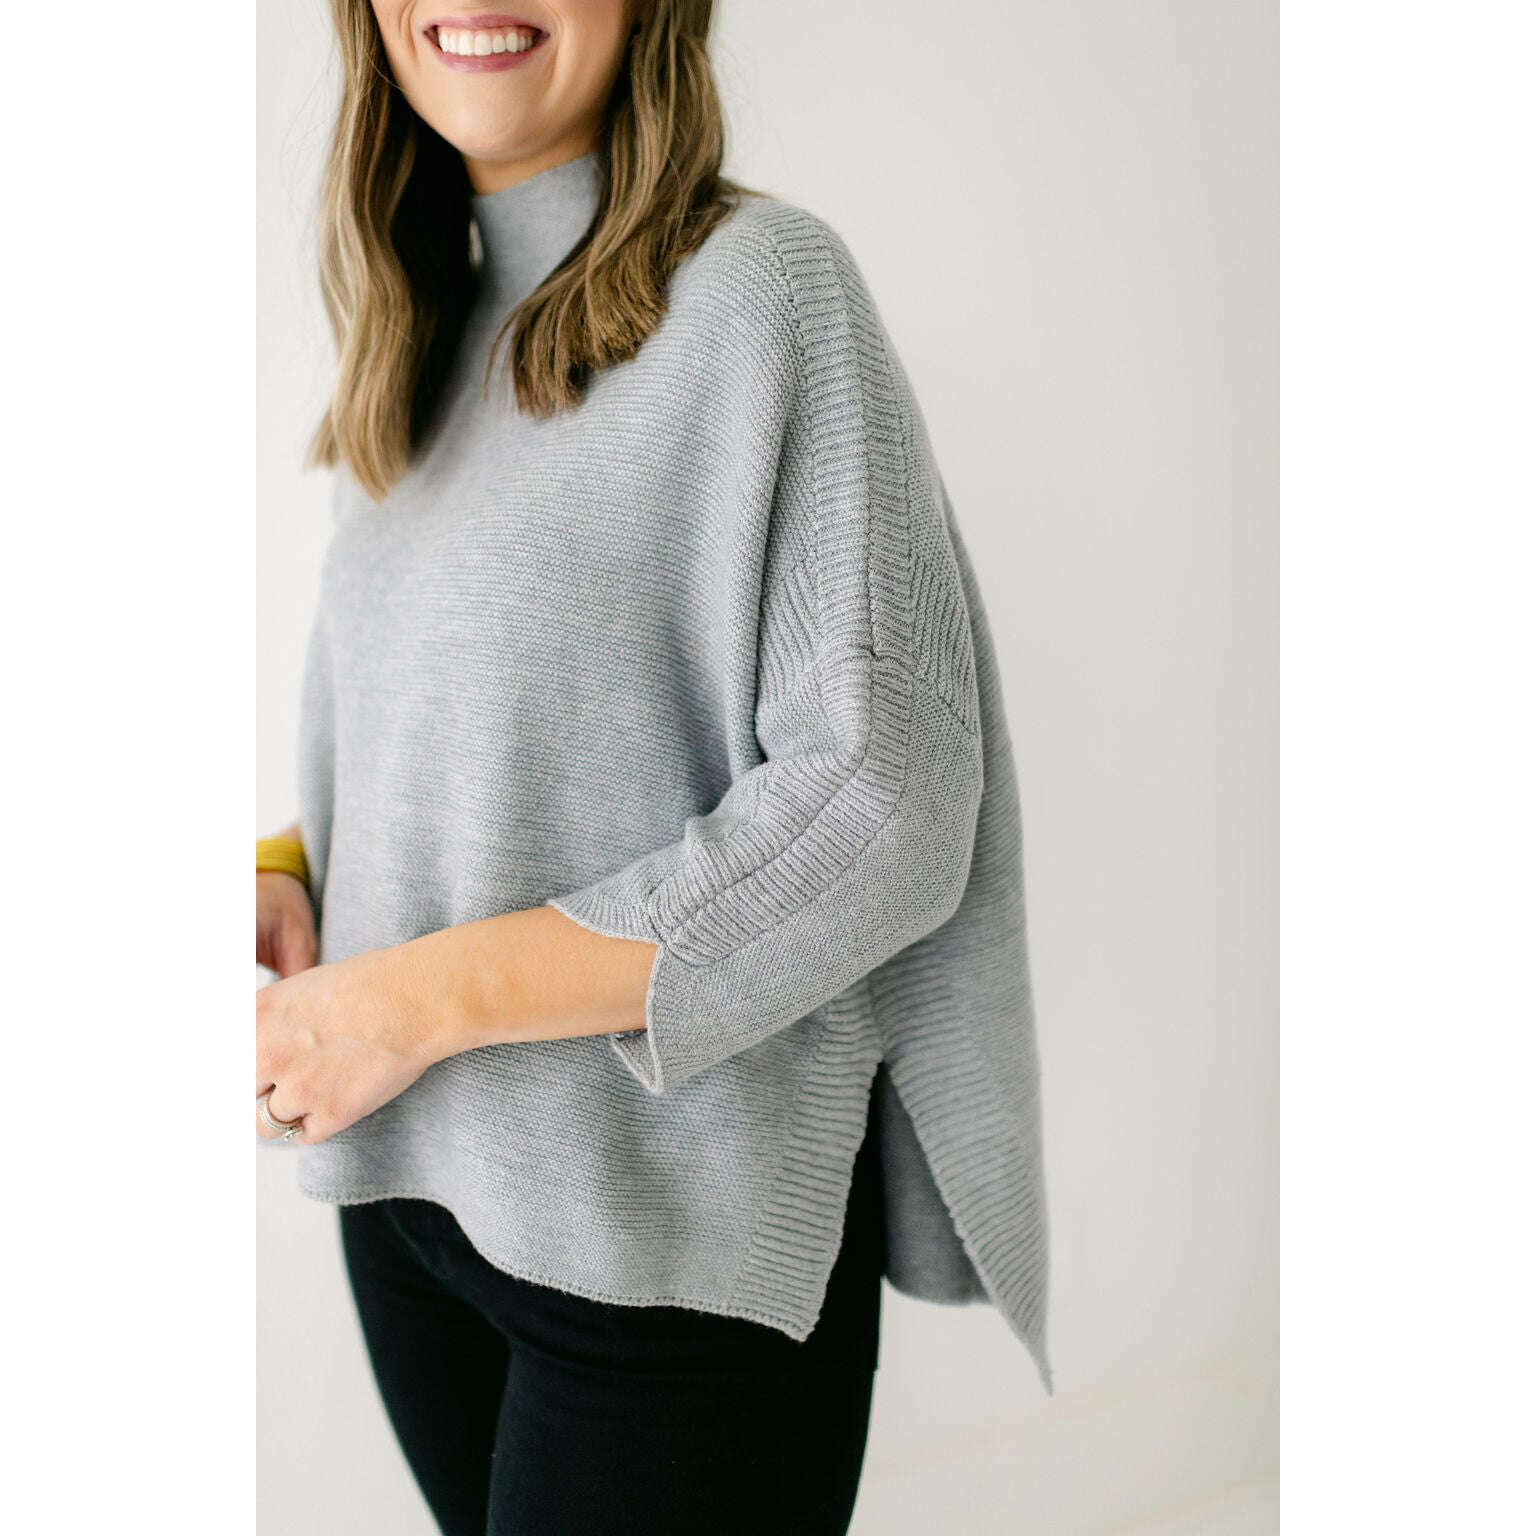 8.28 Boutique:Kerisma Knits,Kerisma Knits Boho Sweater in Heather Grey,Sweaters